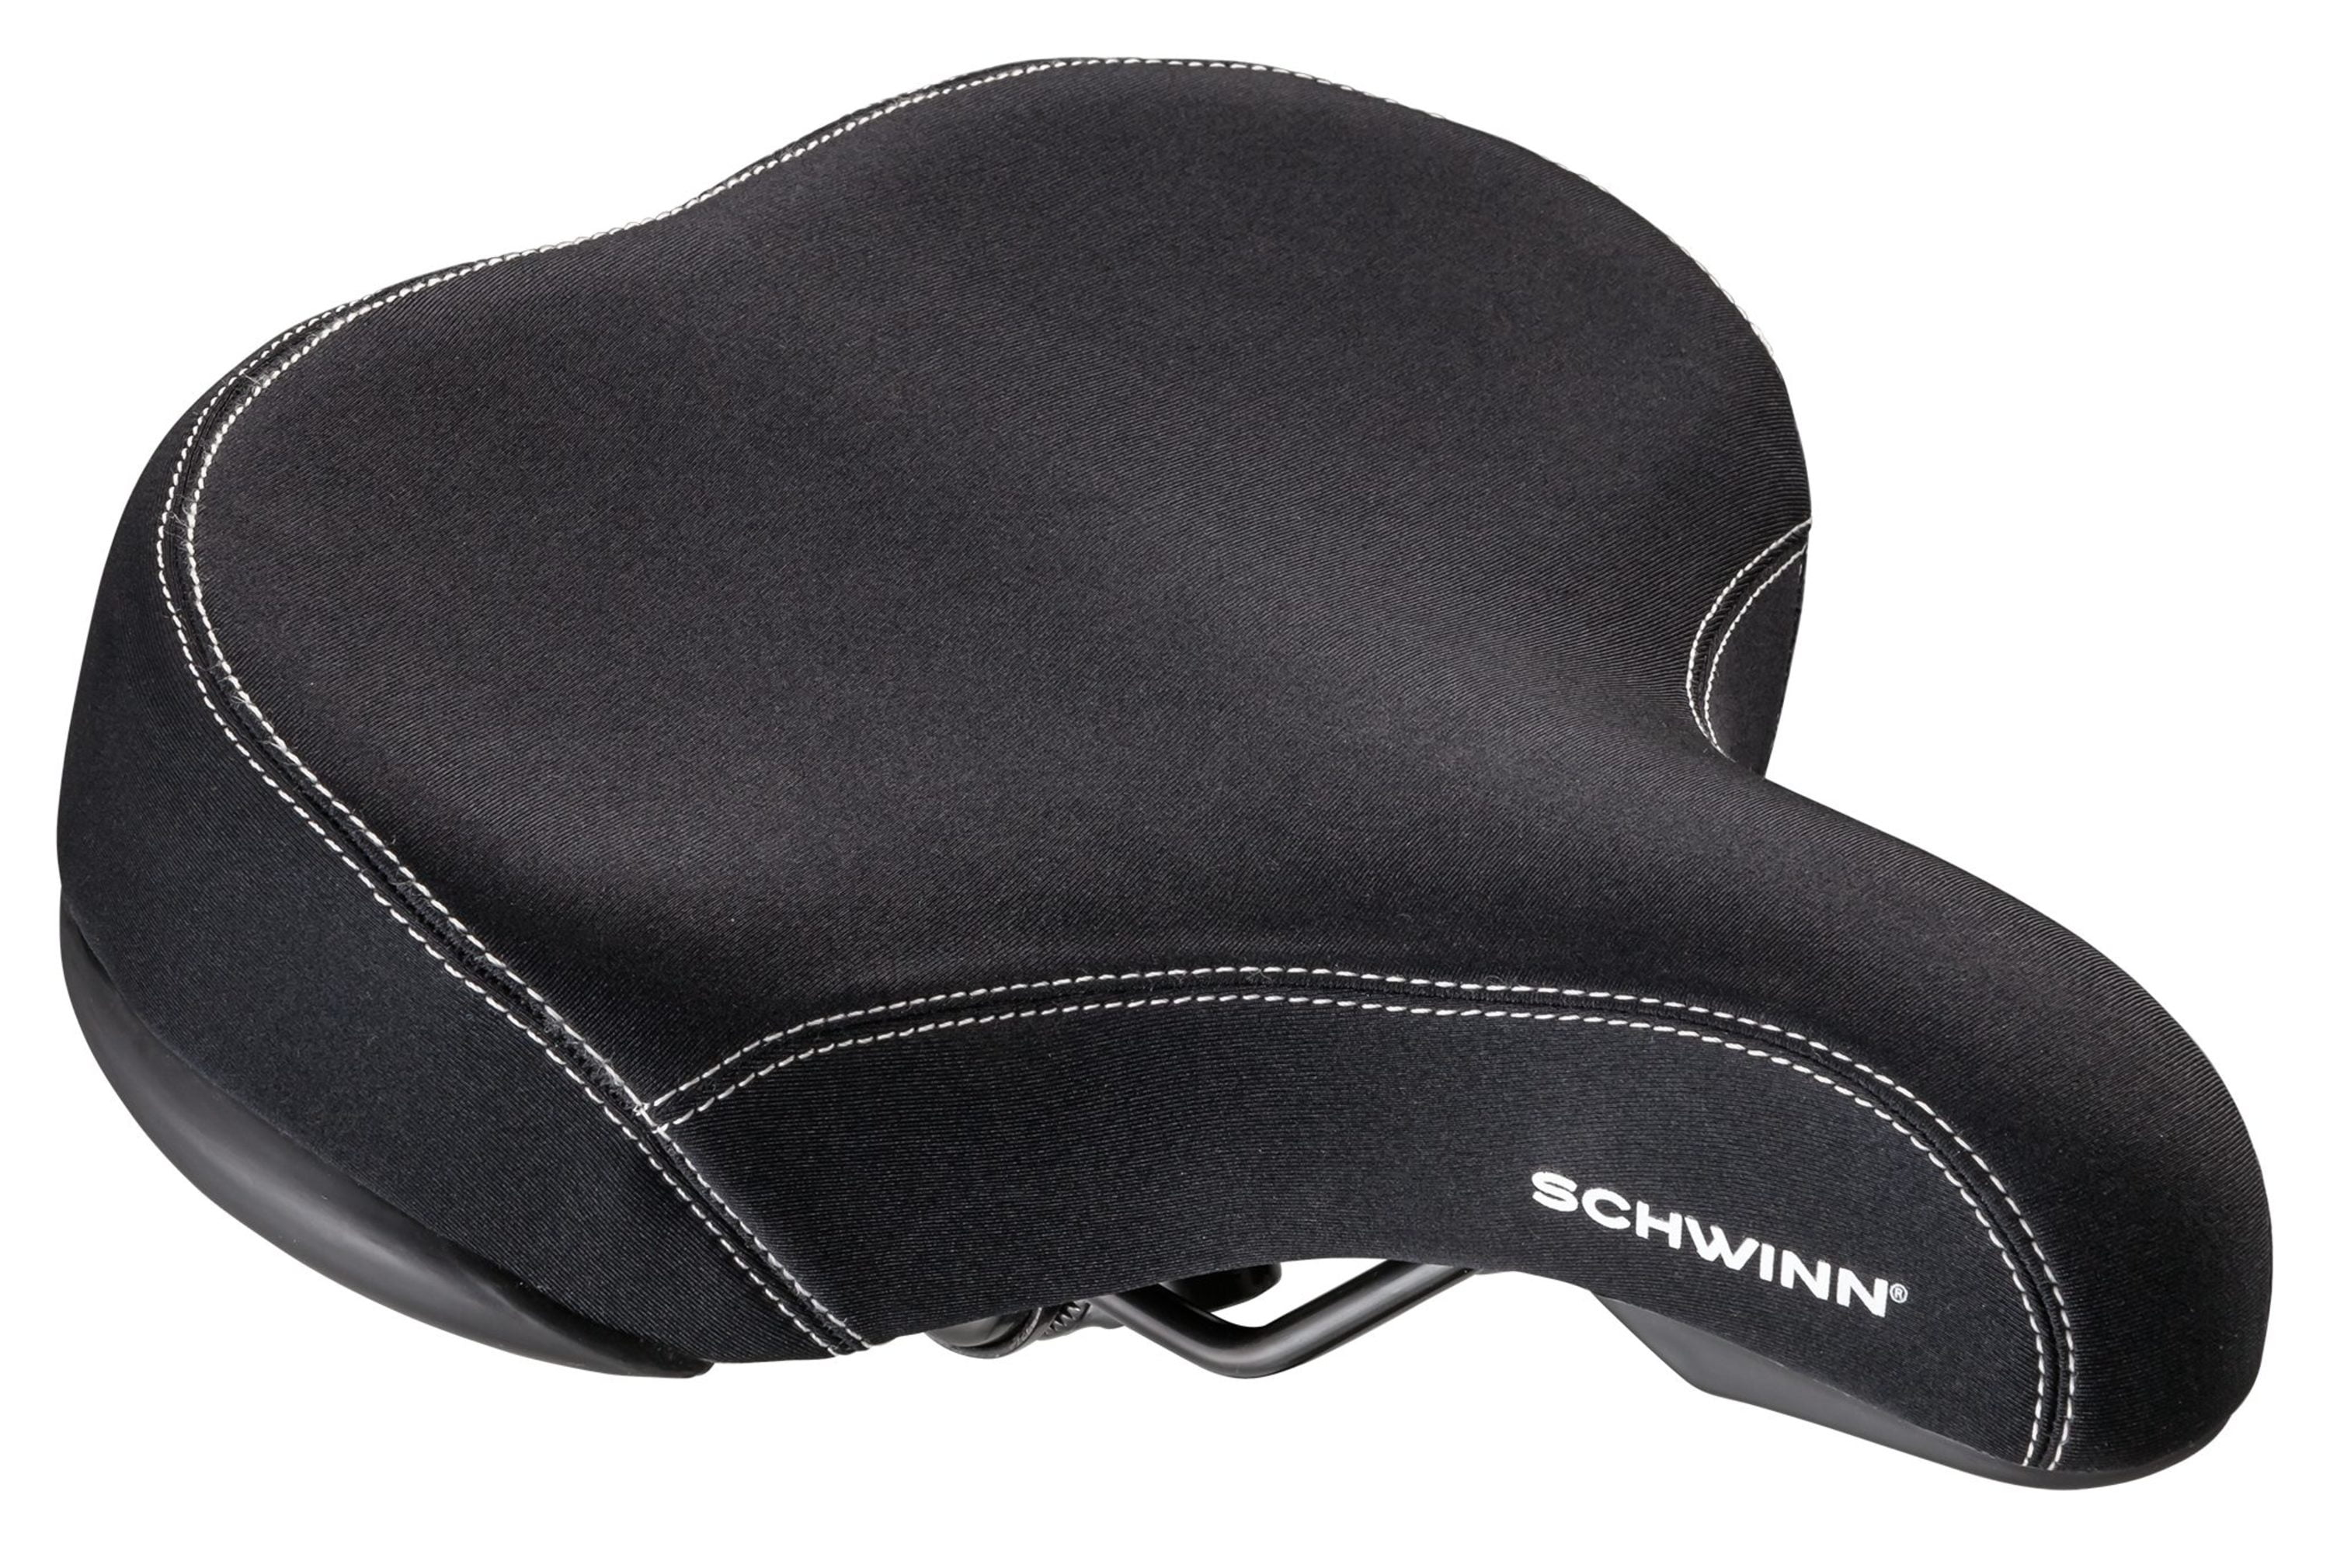 Schwinn No Pressure Bicycle Seat Ergonomic Comfort Padded Durable Bike Saddle